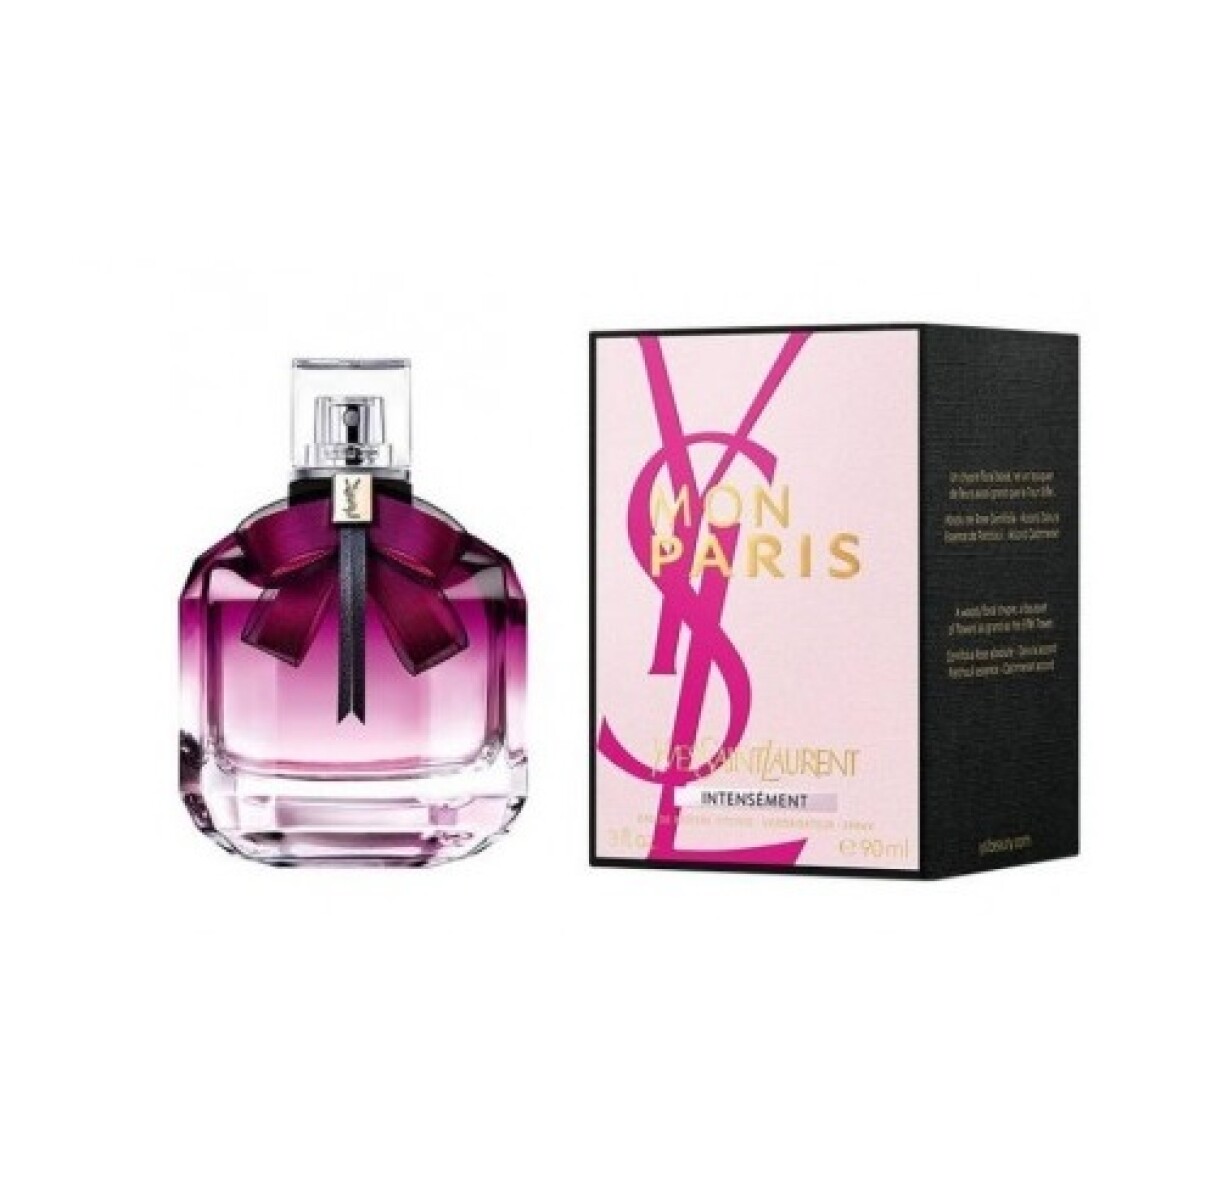 Perfume Yves Saint Laurent Mon Paris Intensement Edp 90 Ml. 